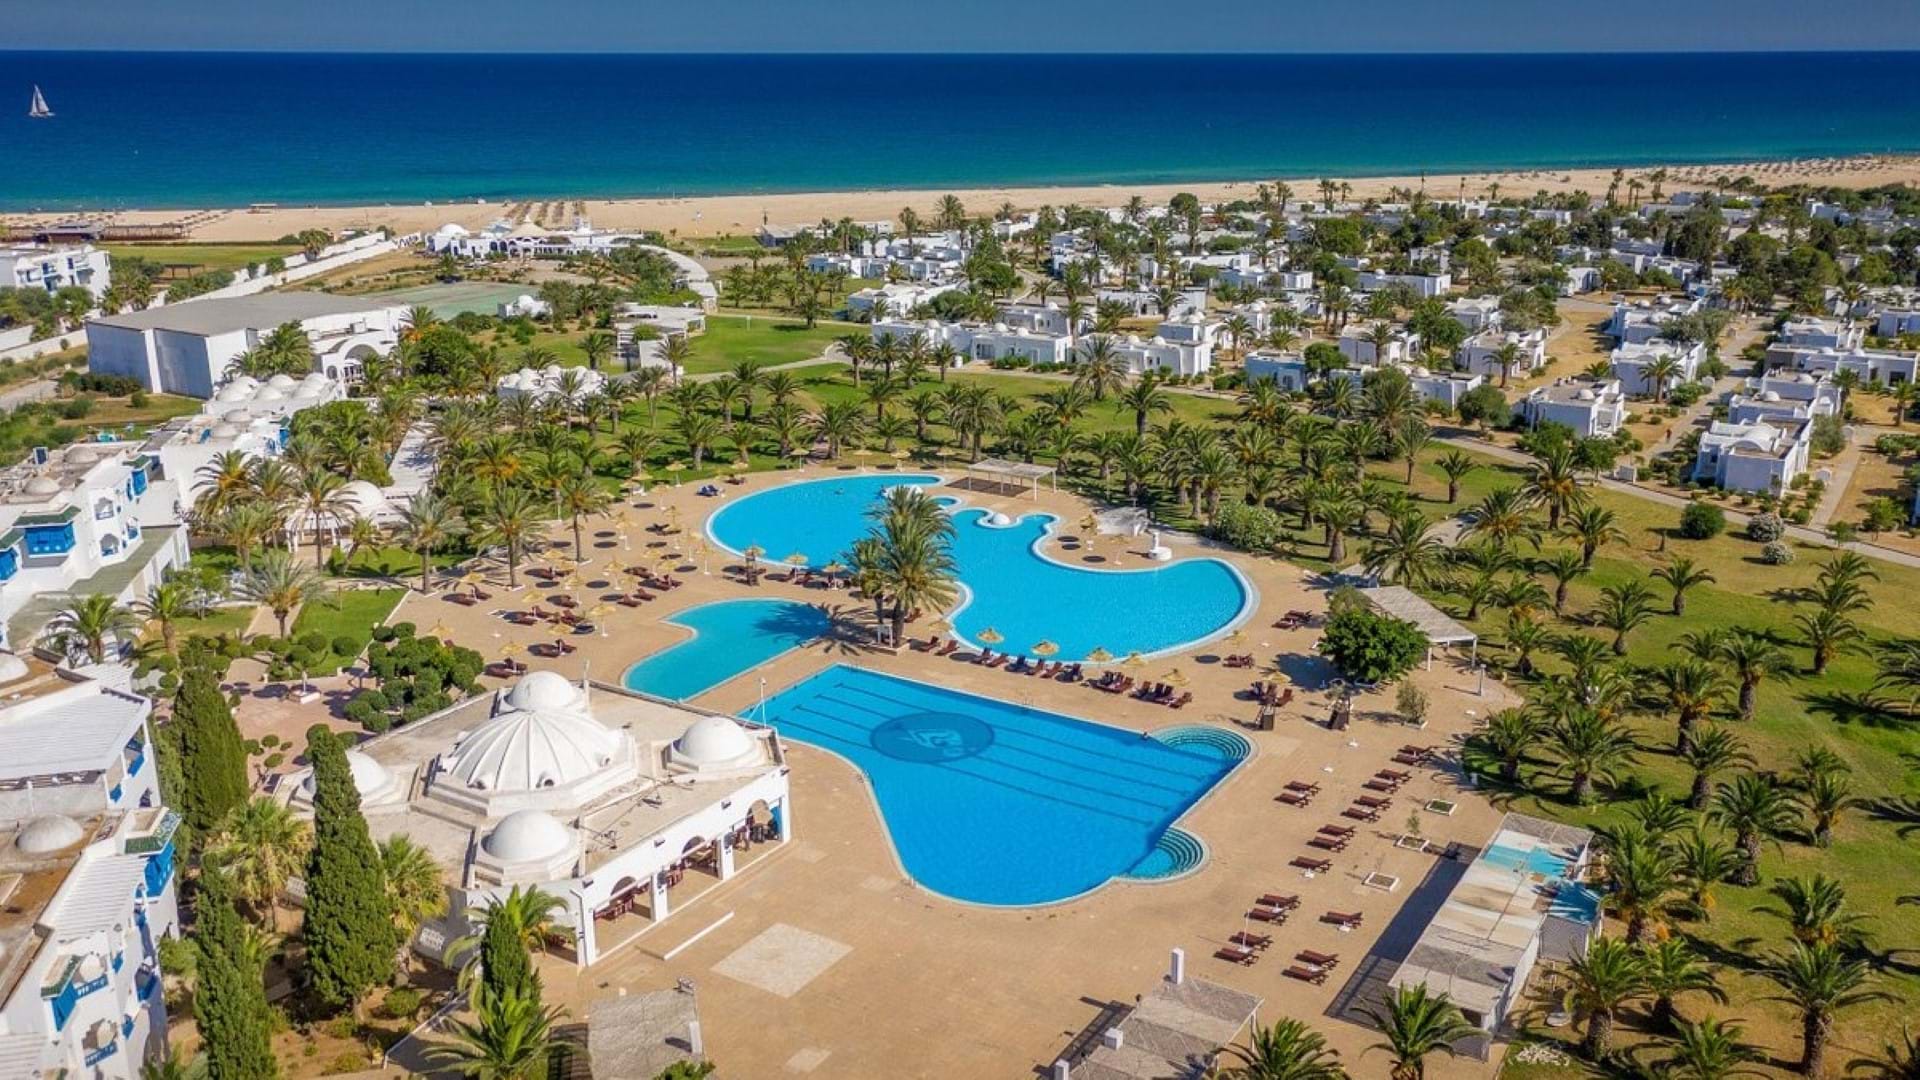 Kompleks hotela Mirage Resort & Spa u Hamametu, Tunisu.